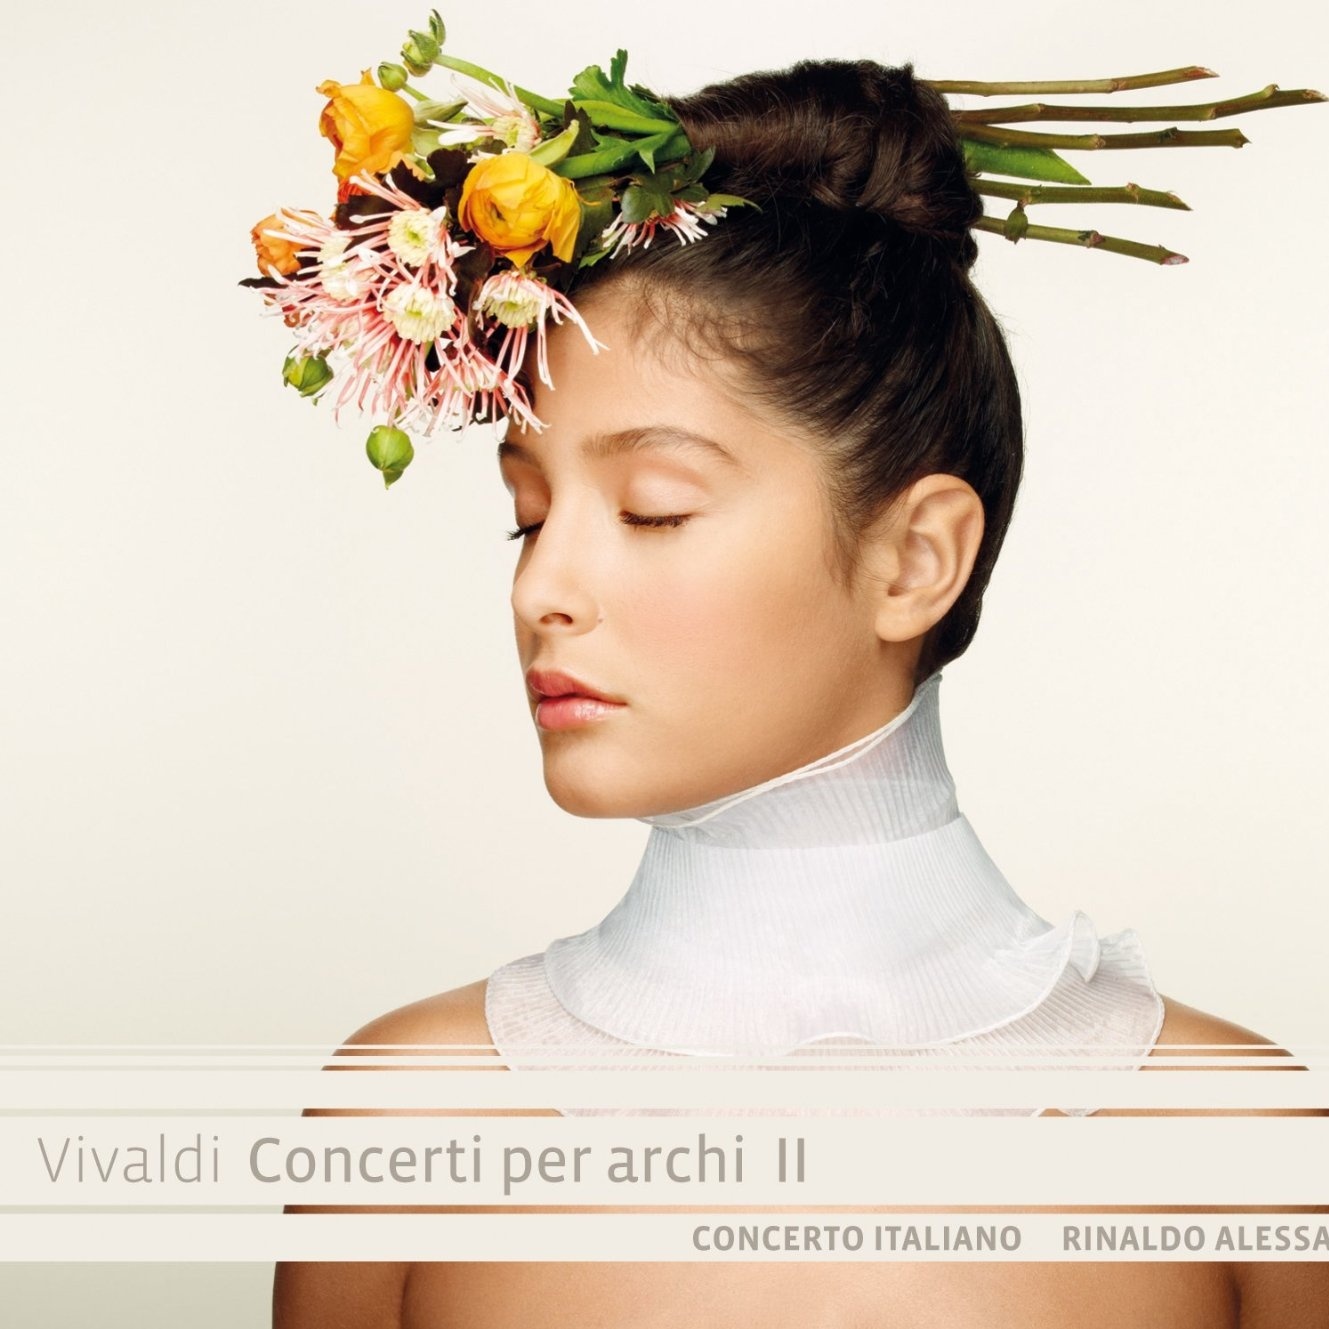 Antonio Vivaldi: Concerto in A Major, RV 160 - III. Allegro